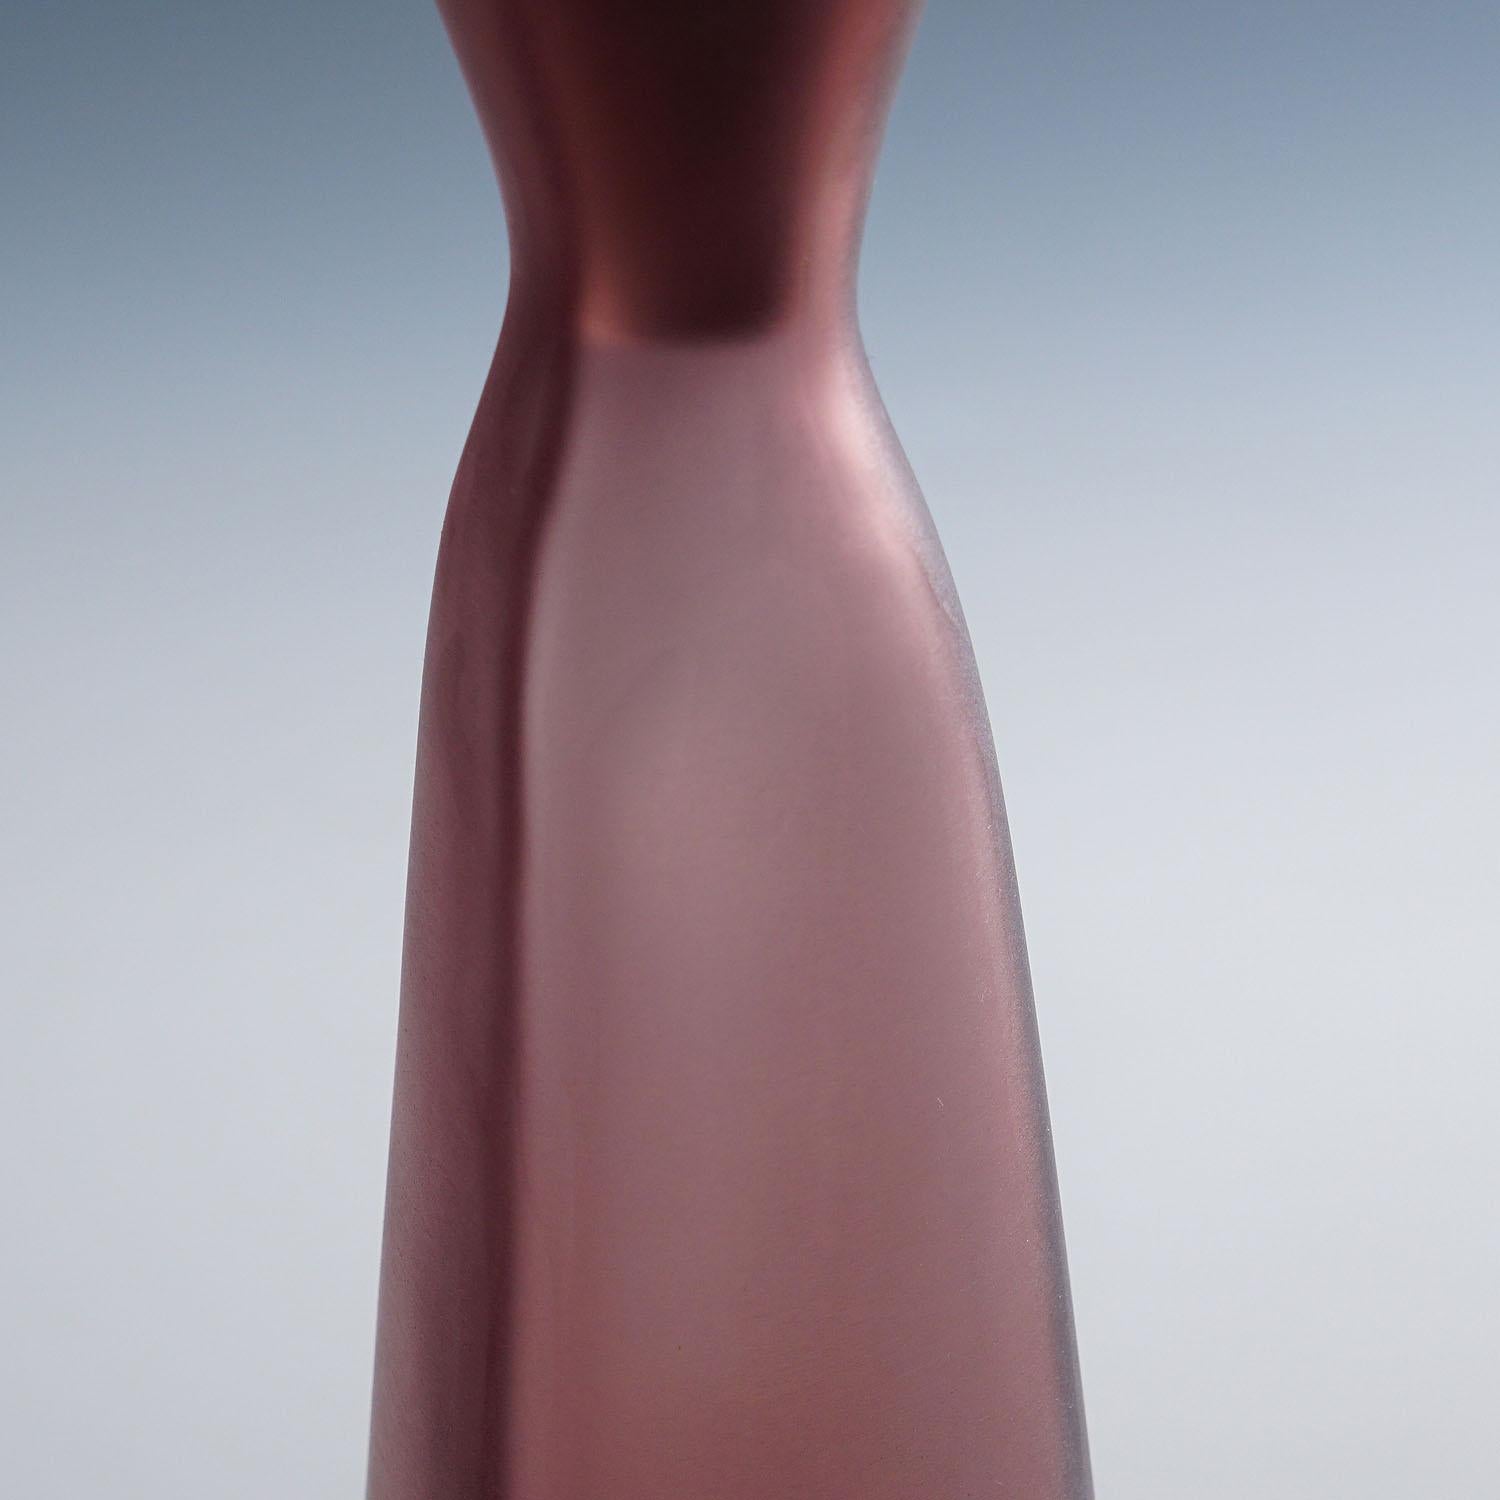 Paolo Venini Inciso Glass Bottle Manufactured by Venini 1990s In Good Condition For Sale In Berghuelen, DE